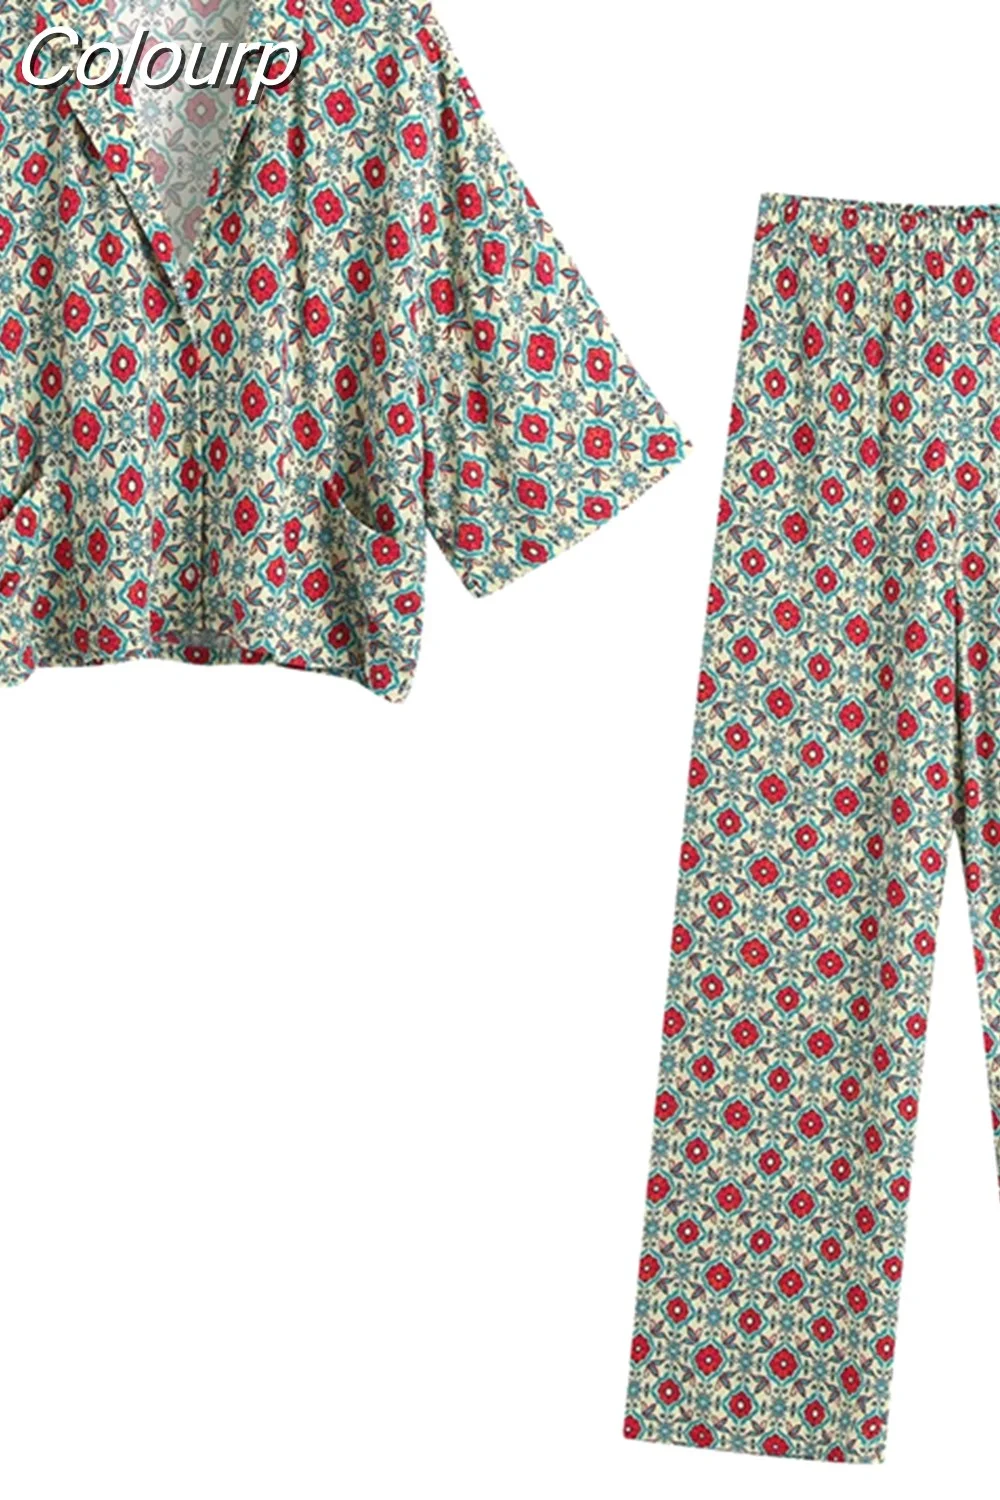 Colourp Blouse Pants Sets Two Pieces Jumpsuits Long Sleeve Retro Blouse Shirts Women Female Suits Spring Summer Outfit Pajamas